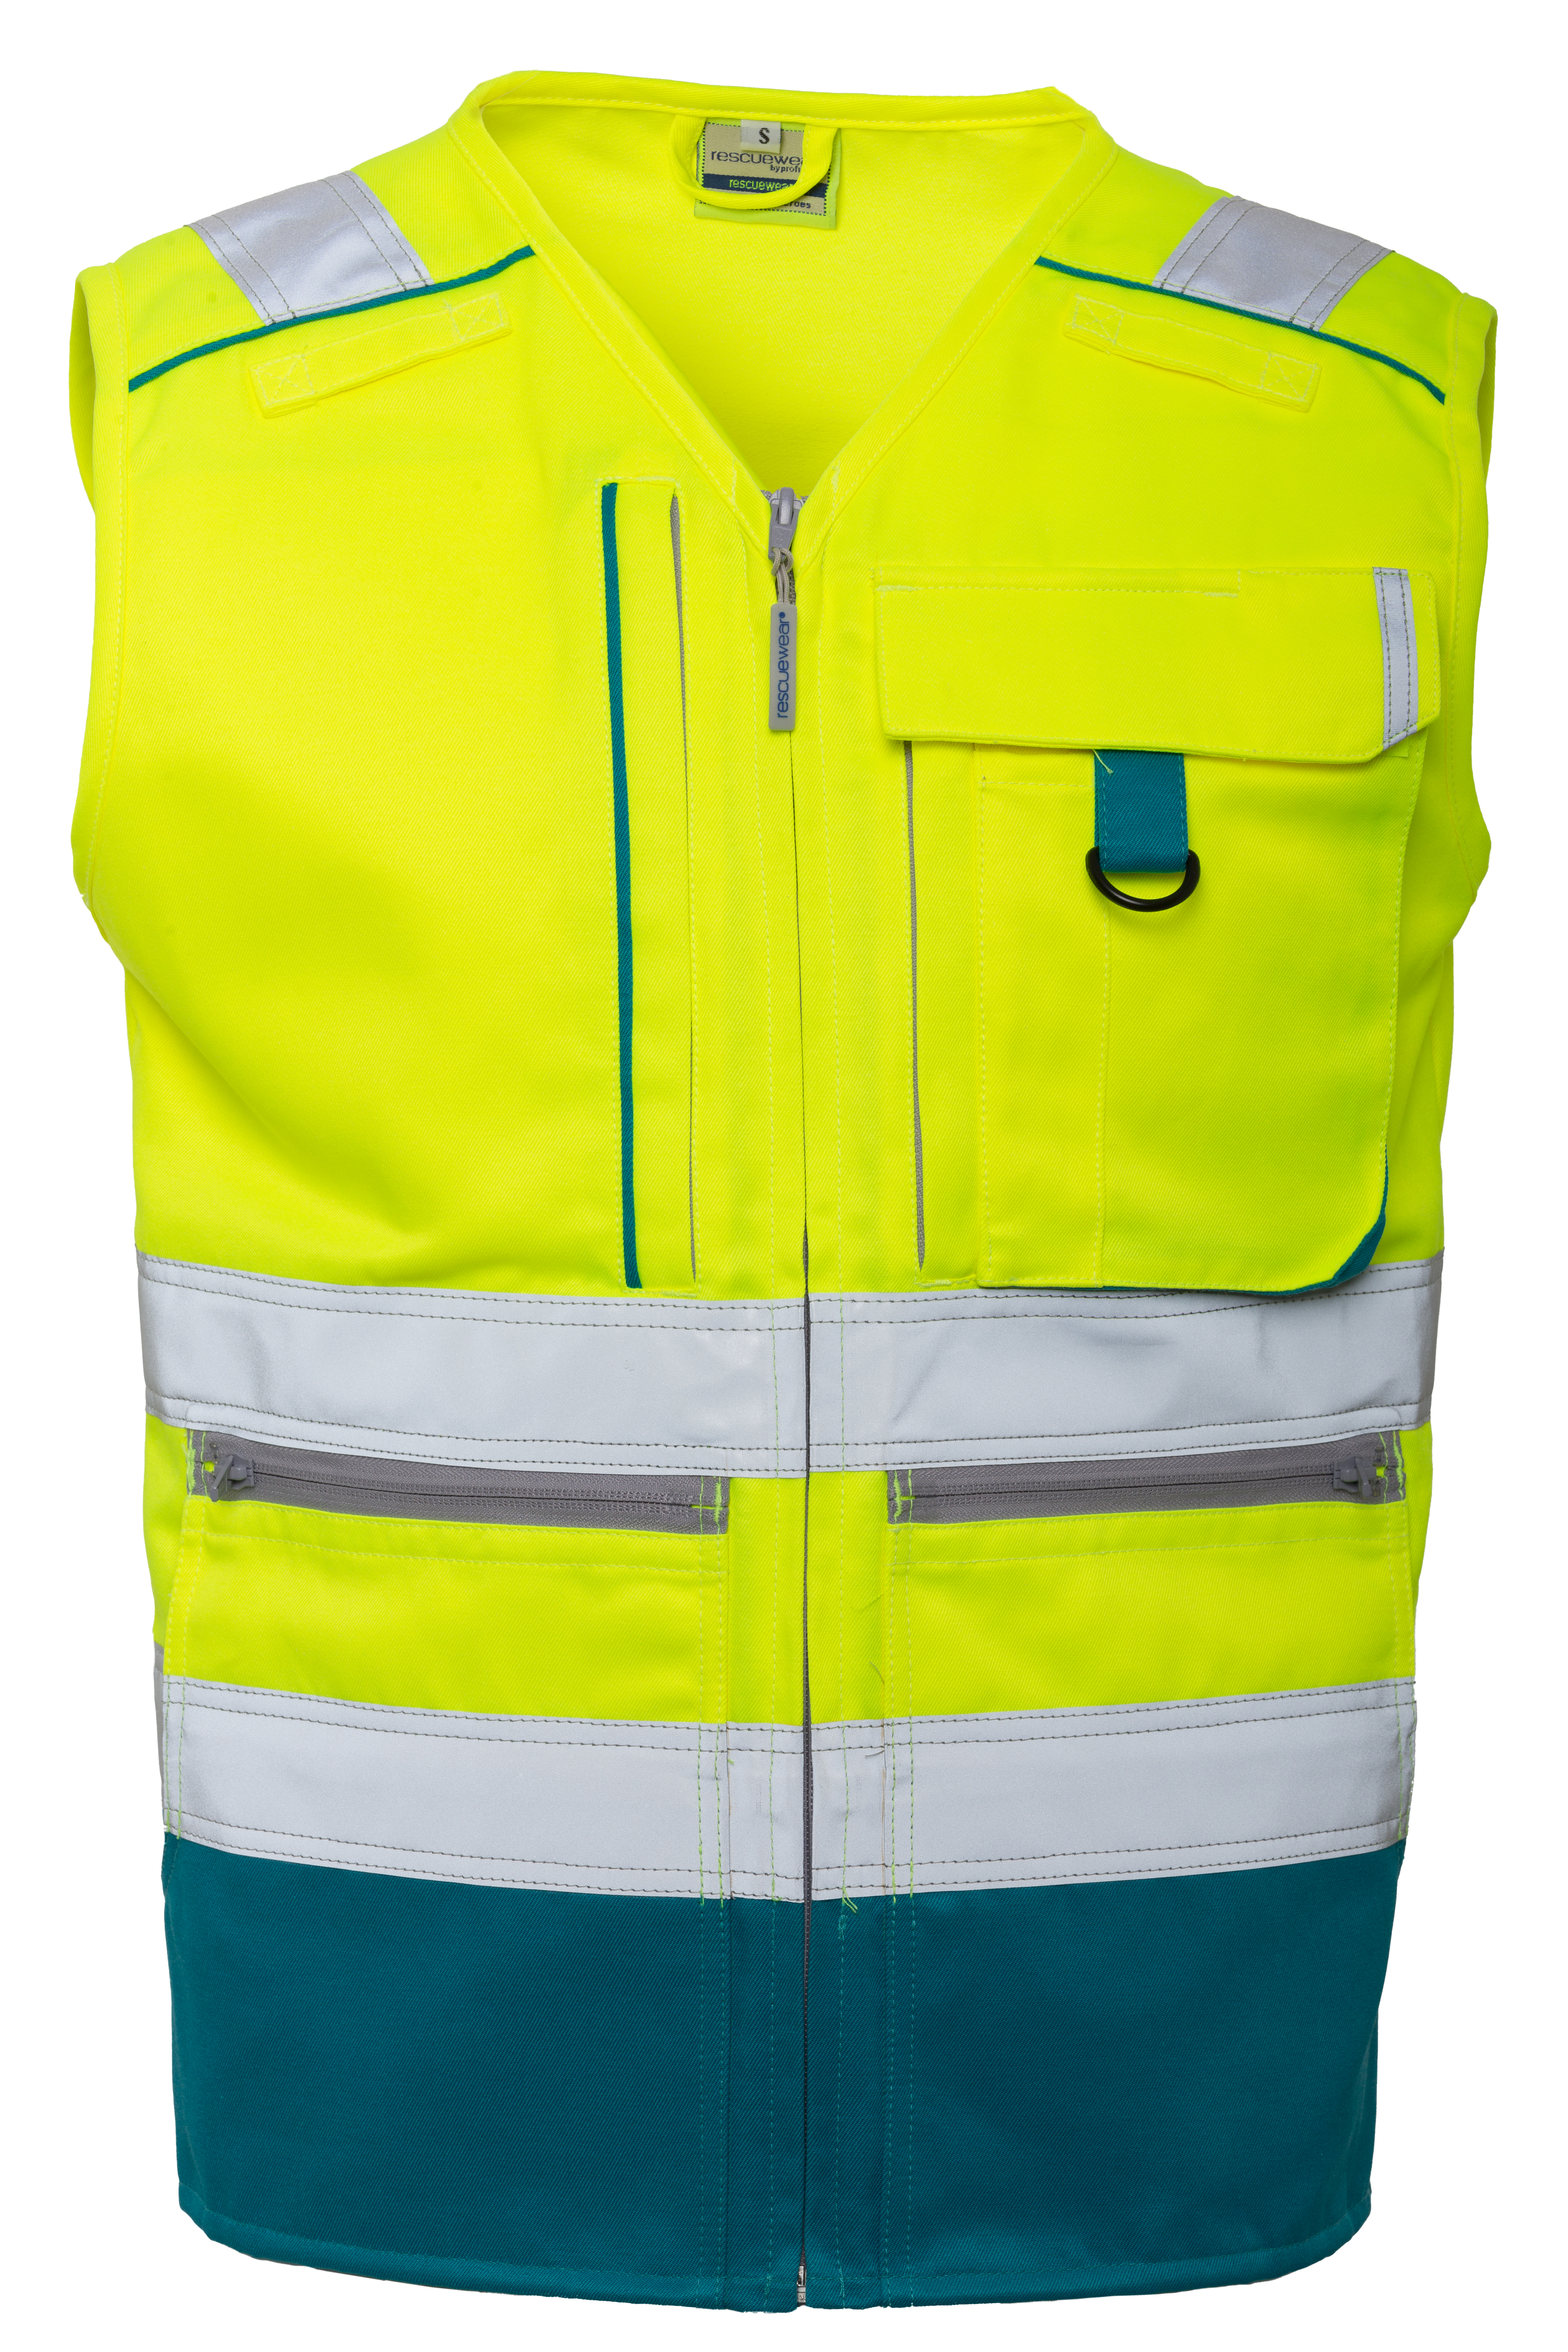 Rescuewear Sommerweste Dynamic HiVis Klasse 1 Enamelblau / Neon Gelb  - L